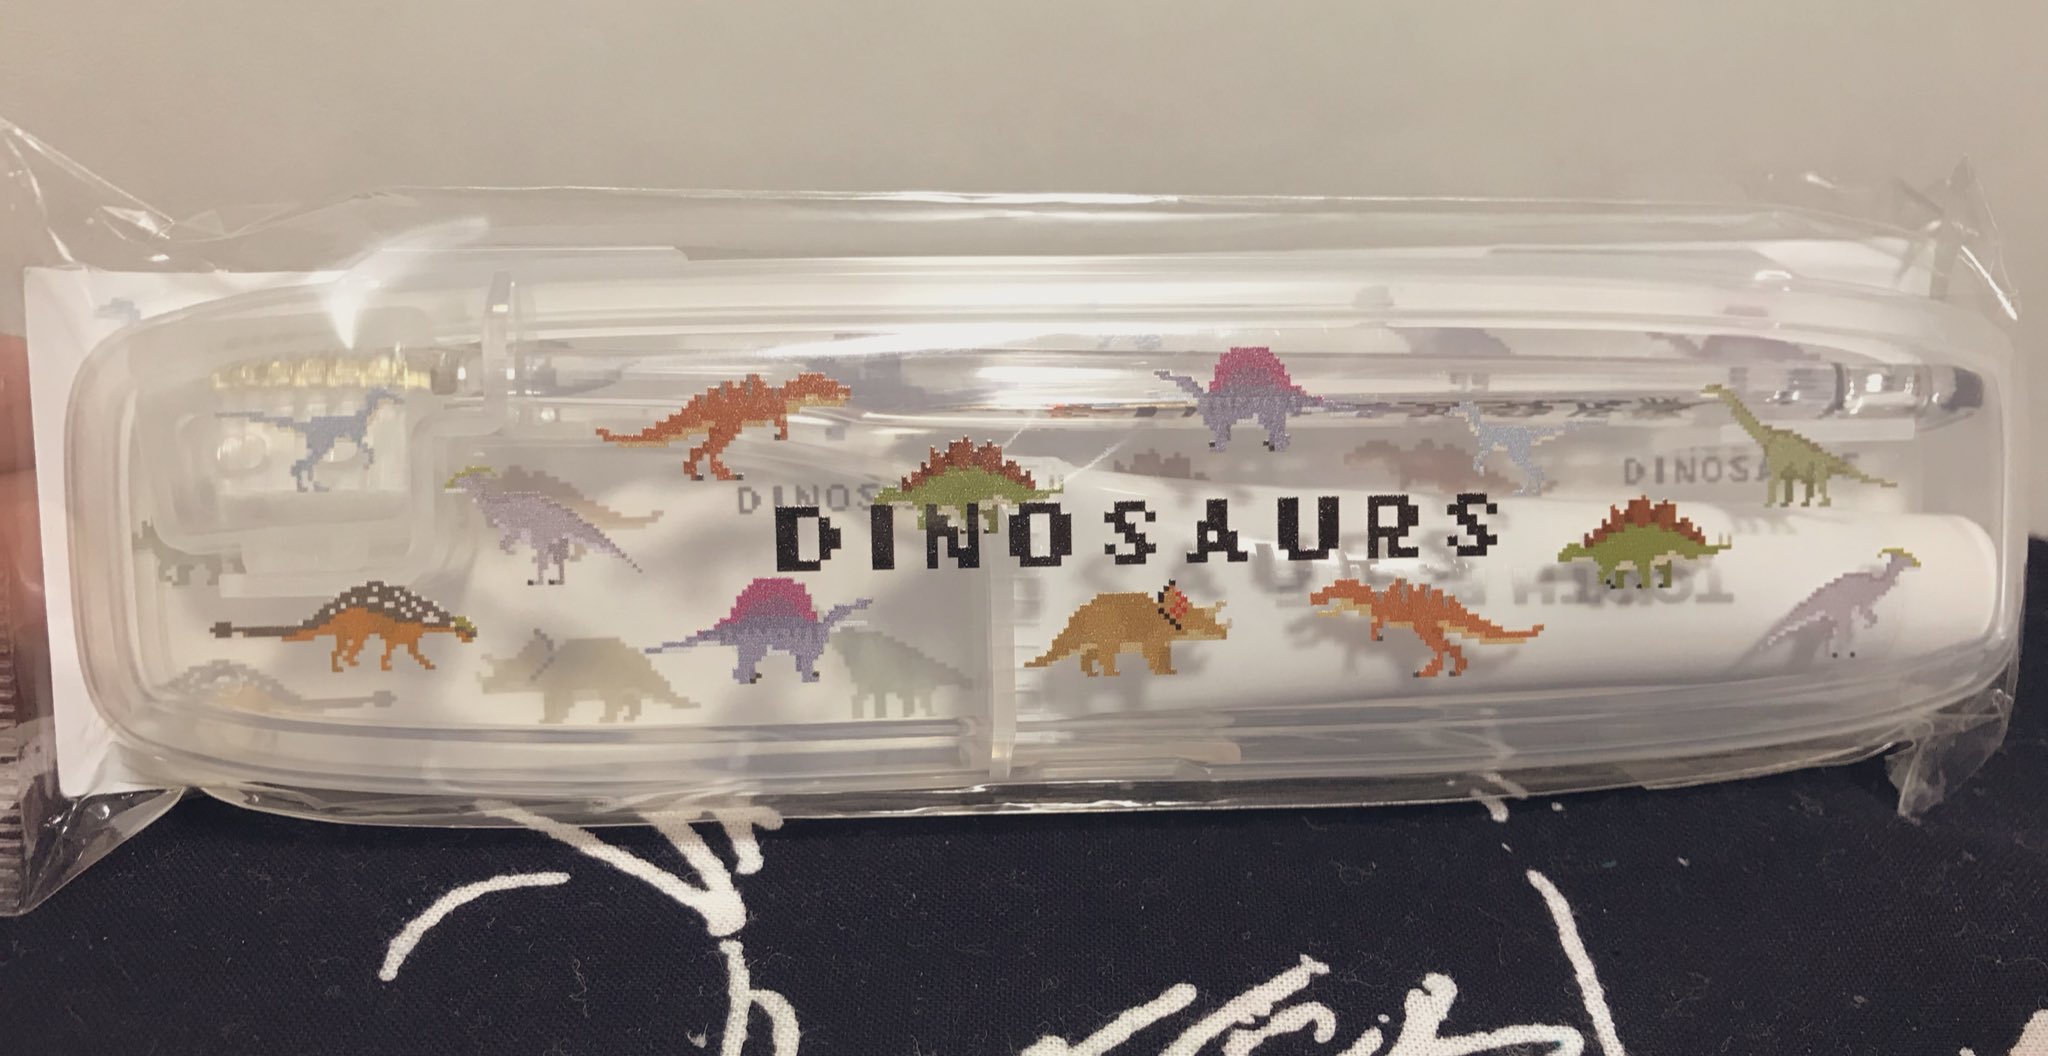 Nisipedino Dinosaurs 歯磨きセット ドットの恐竜がお洒落で可愛い 大人でも使えそう 恐竜グッズ T Co Toygpb7hoa Twitter